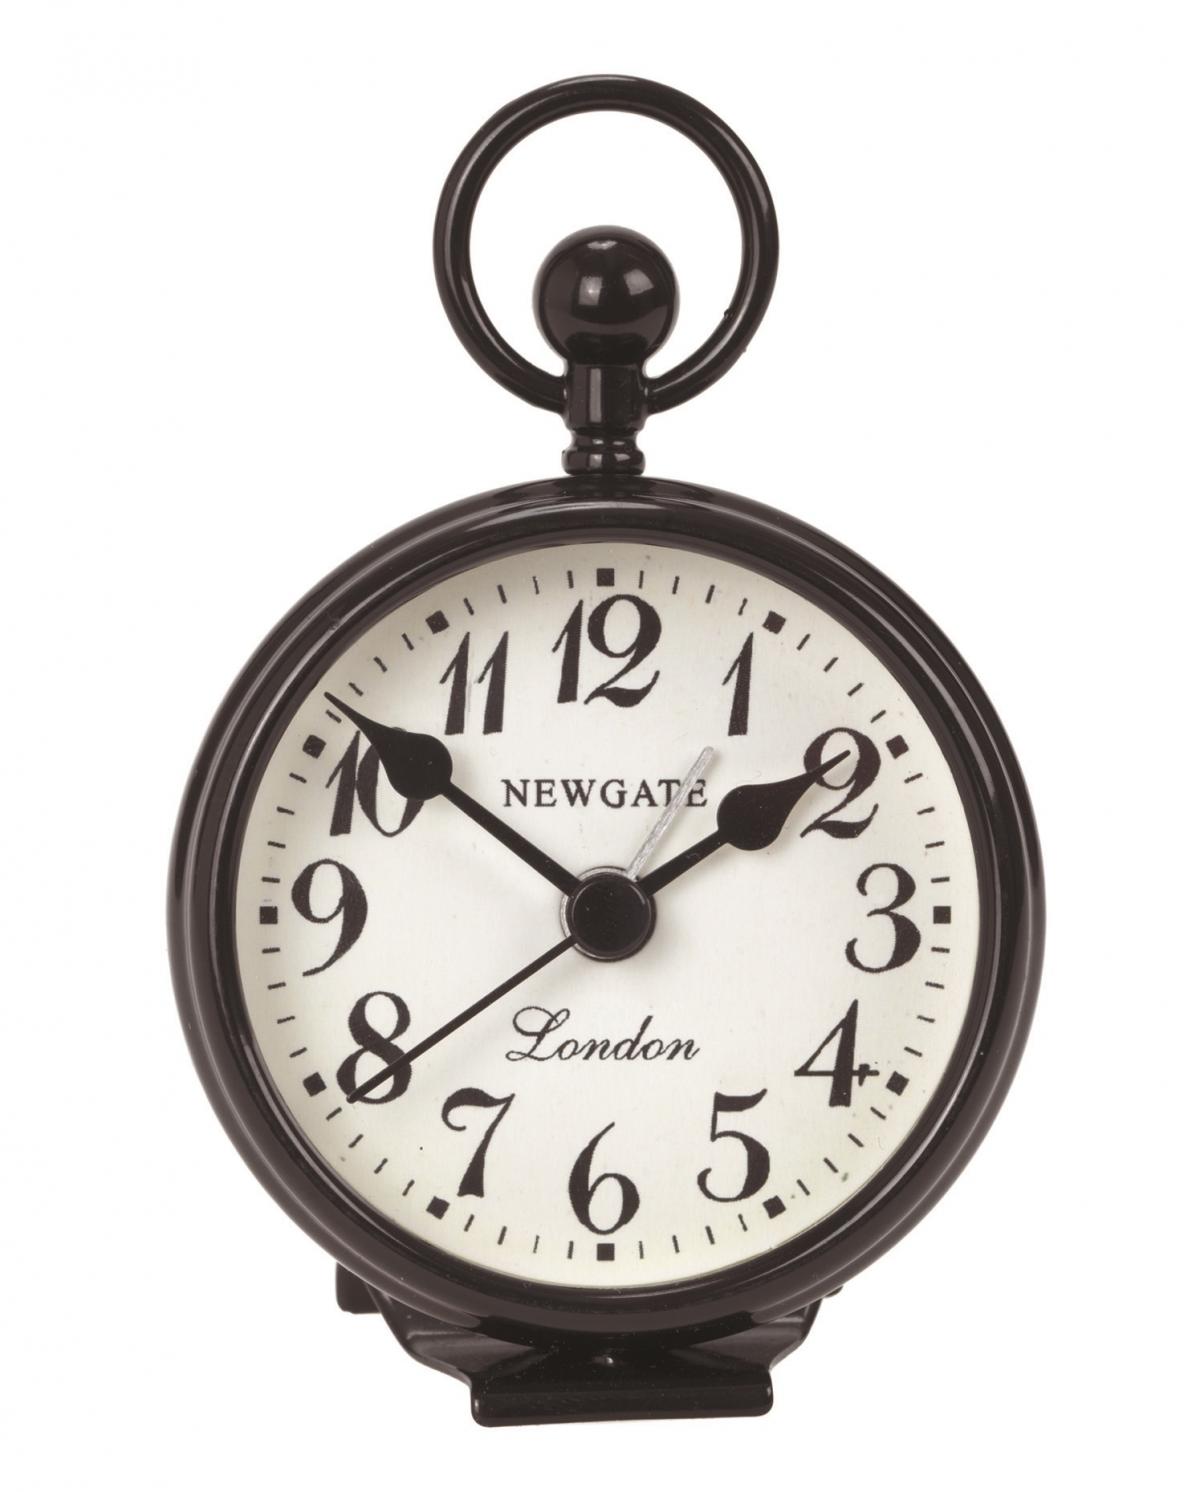 HIM: IWM.co.uk, Pocket Watch Alarm Clock, £15